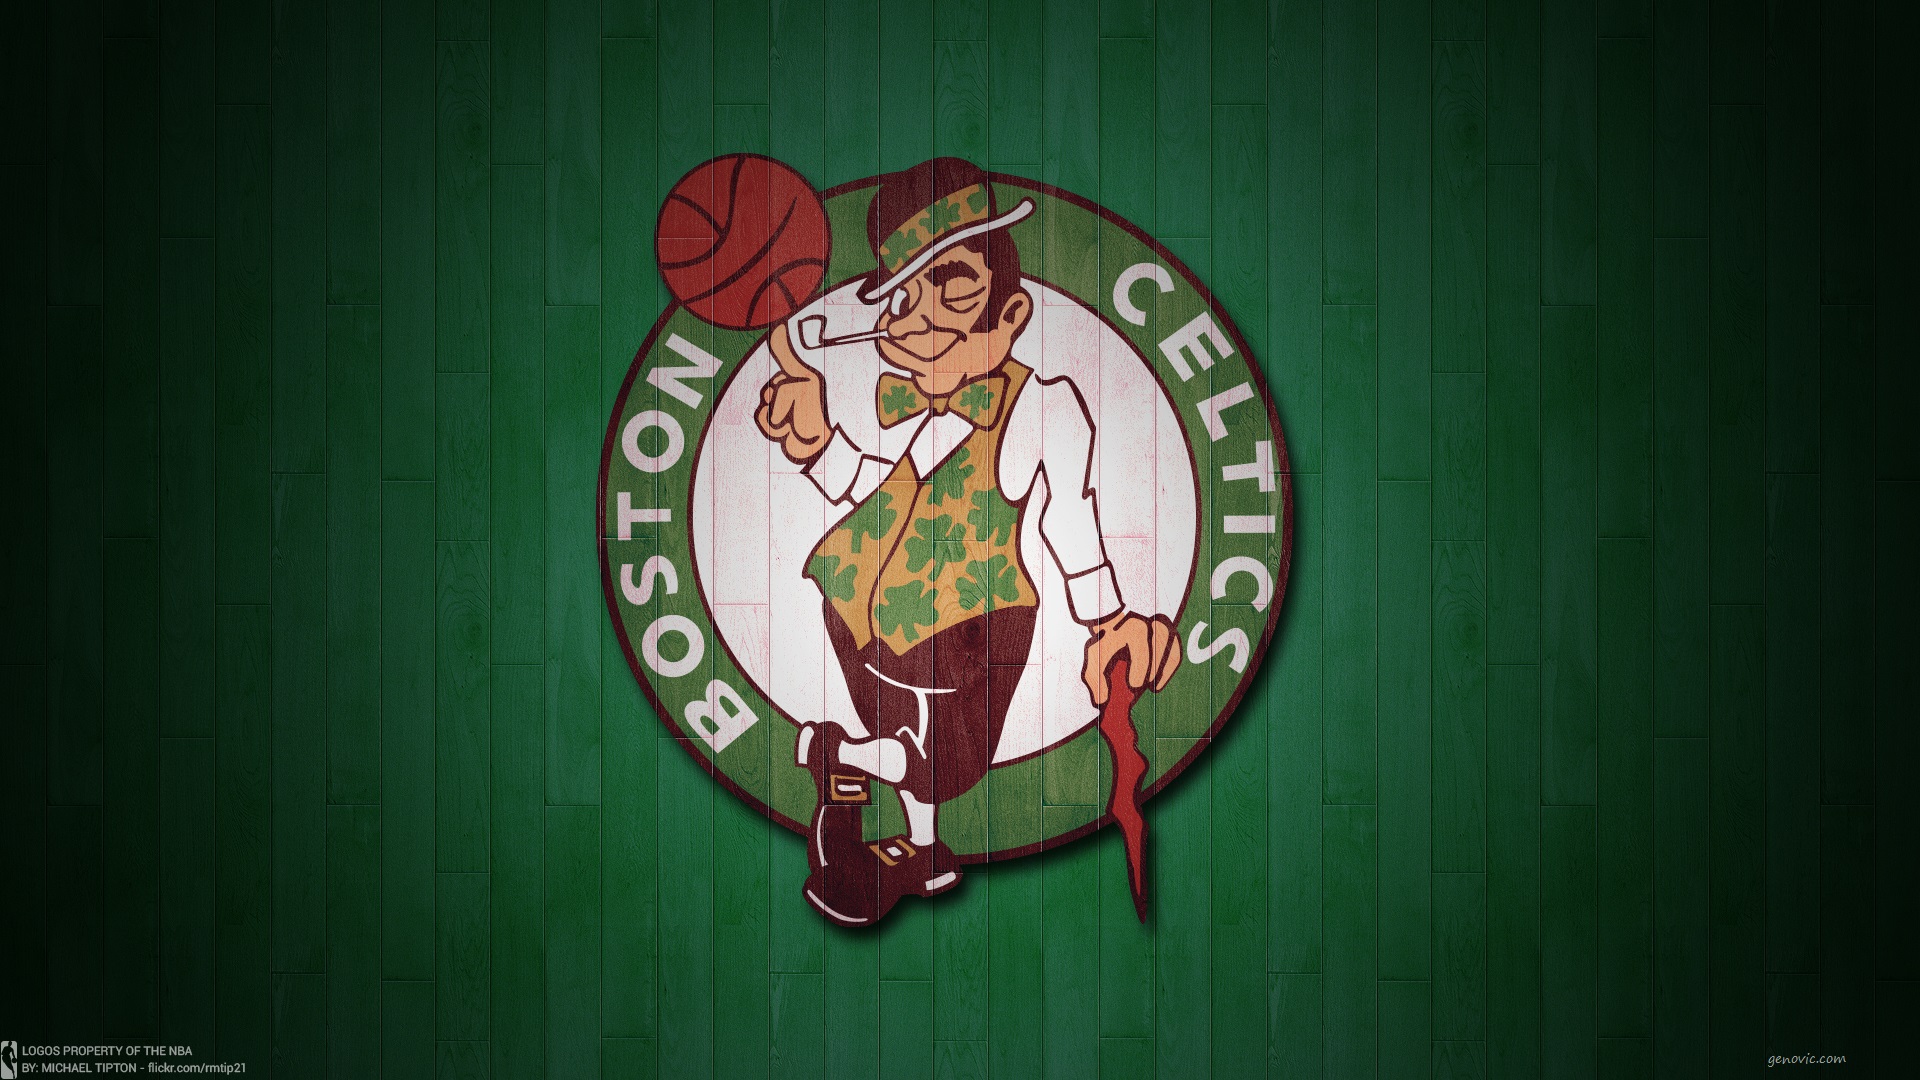 Boston Celtics Wallpaper Full HD Pictures